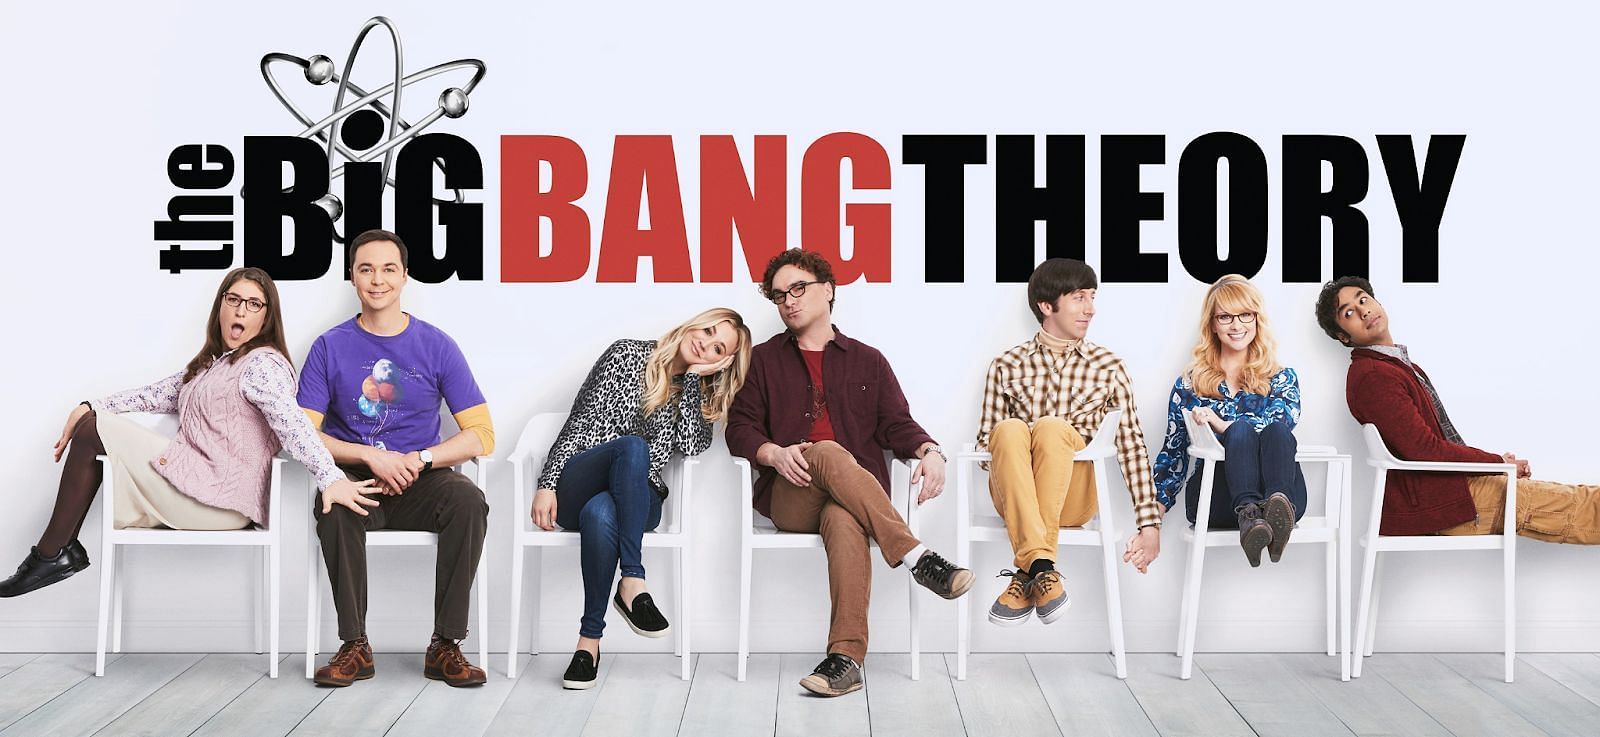 Who sings The Big Bang Theory theme song?